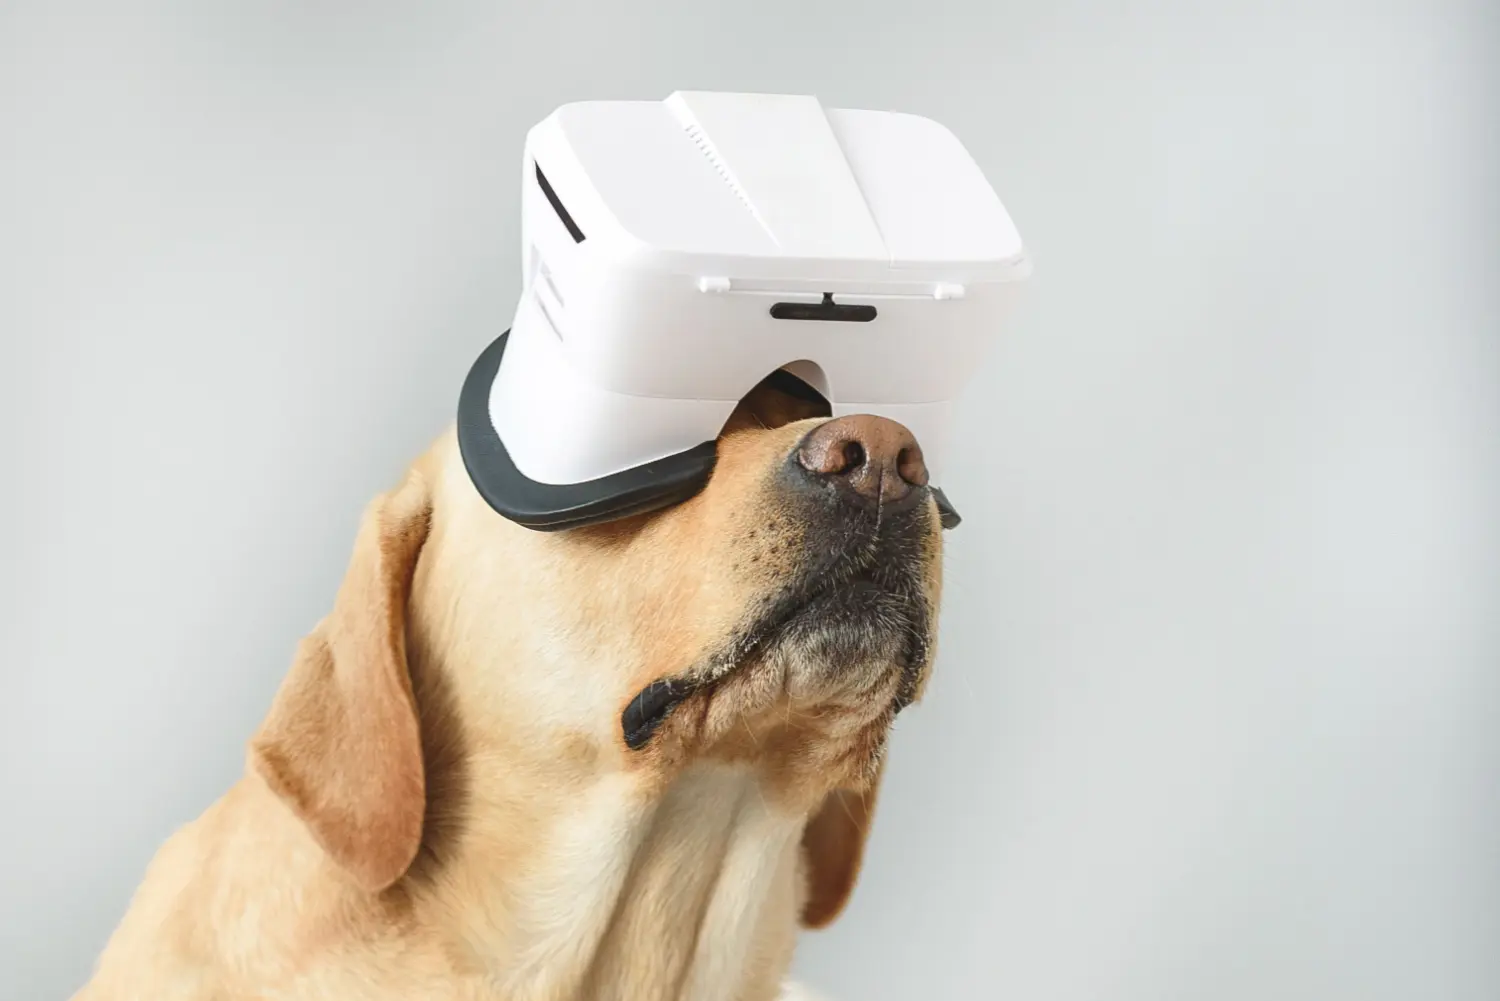 MSD Saude Animal VR marketing